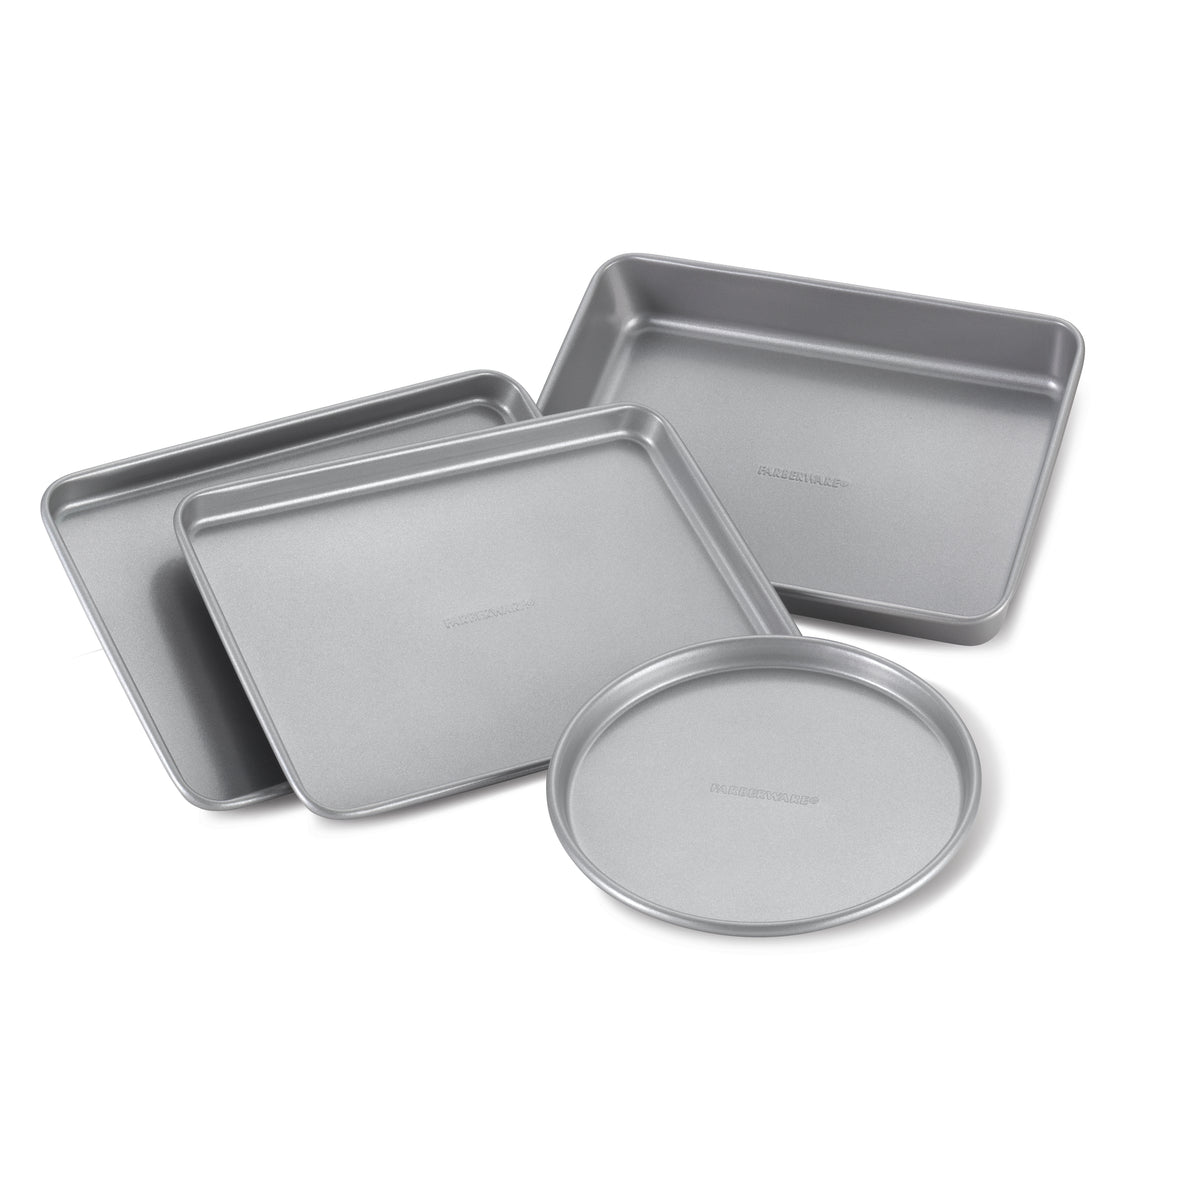 Farberware 2-Slice Stainless Steel Toaster 